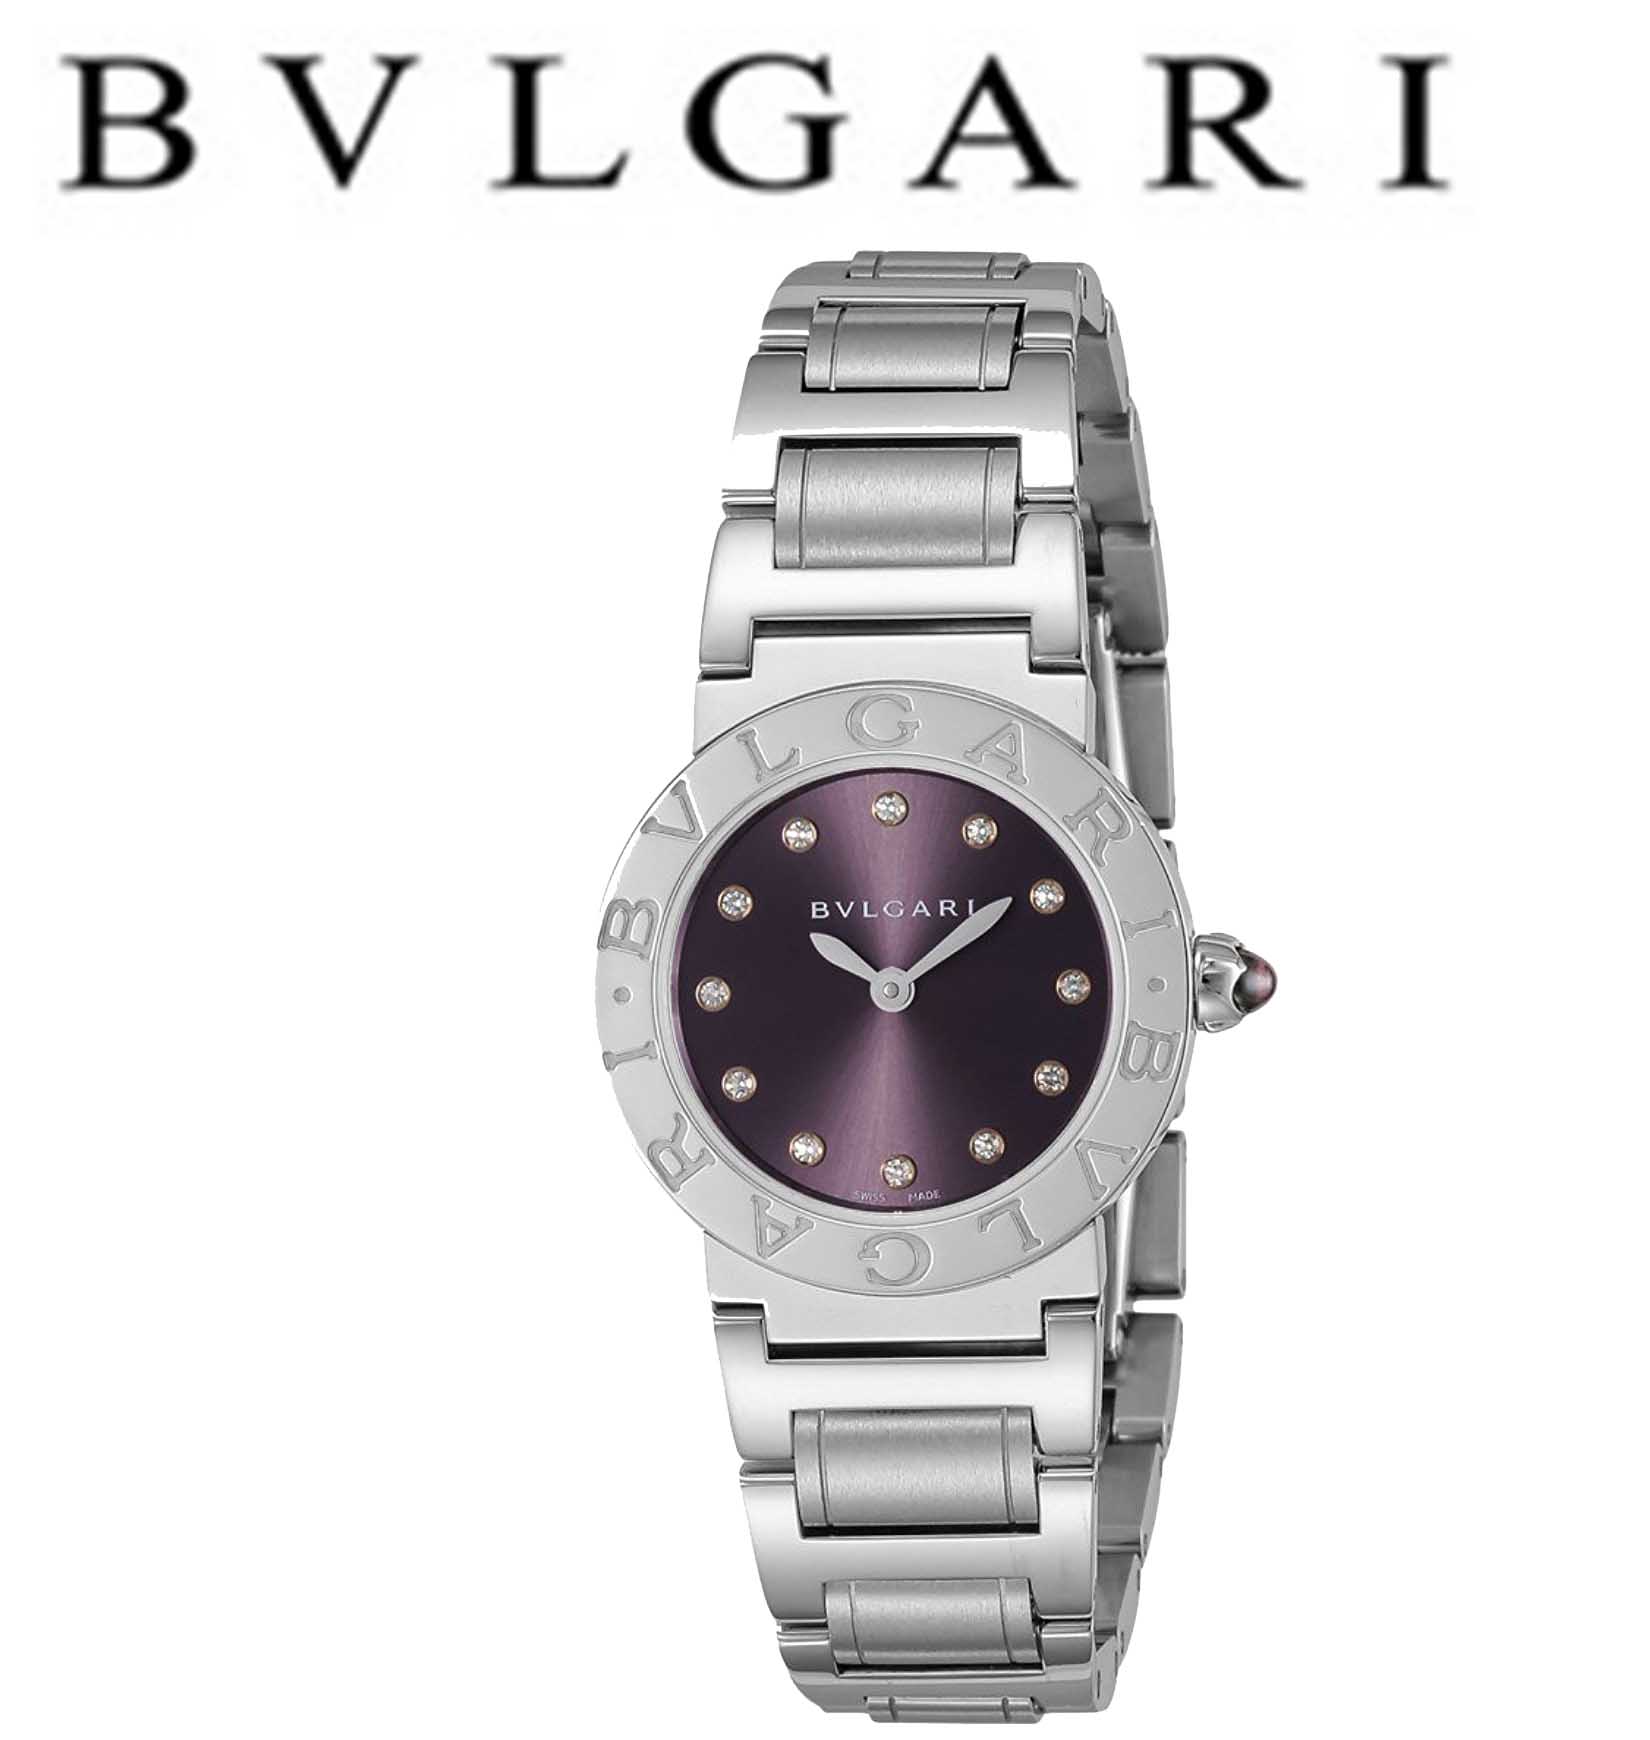 【BVLGARI】(ブルガリ) 腕時計 レディース パープル